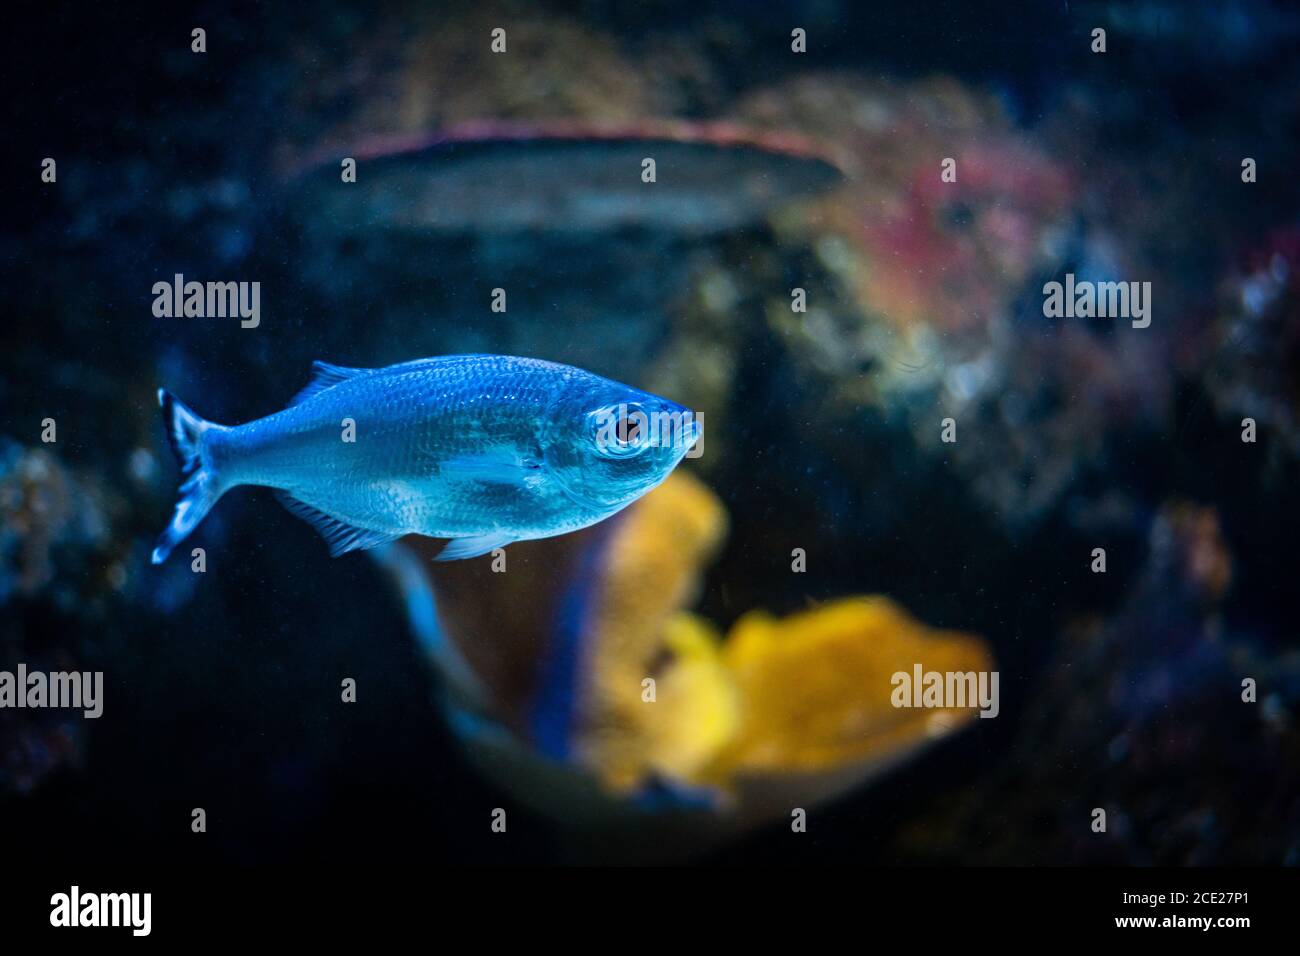 Silver fish swimming in a tank Stock Photo